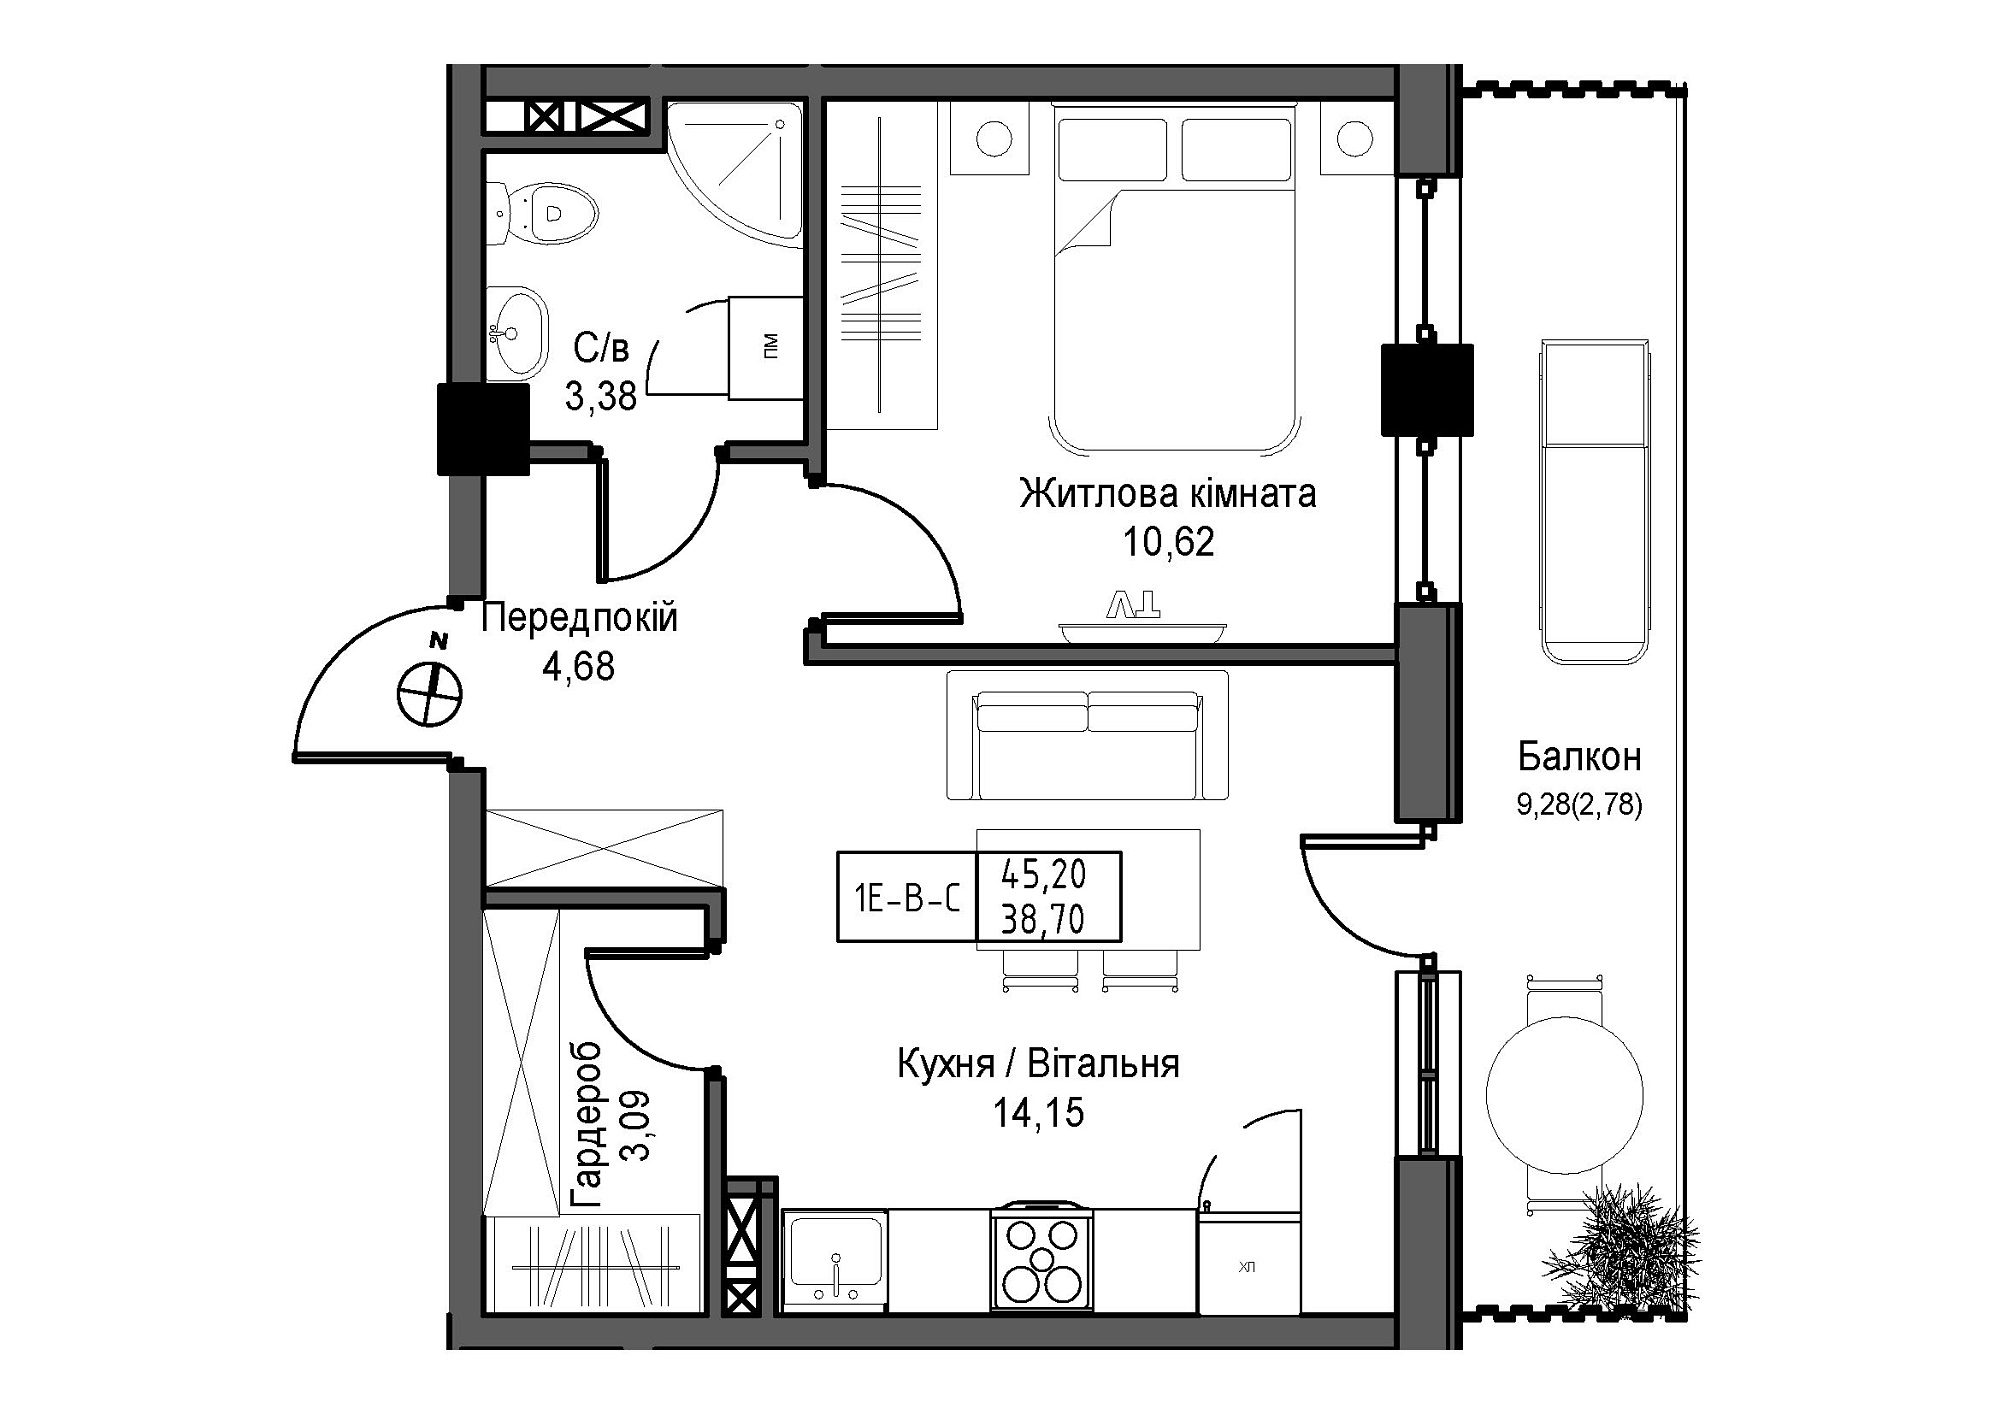 Планування 1-к квартира площею 38.7м2, UM-007-12/0006.